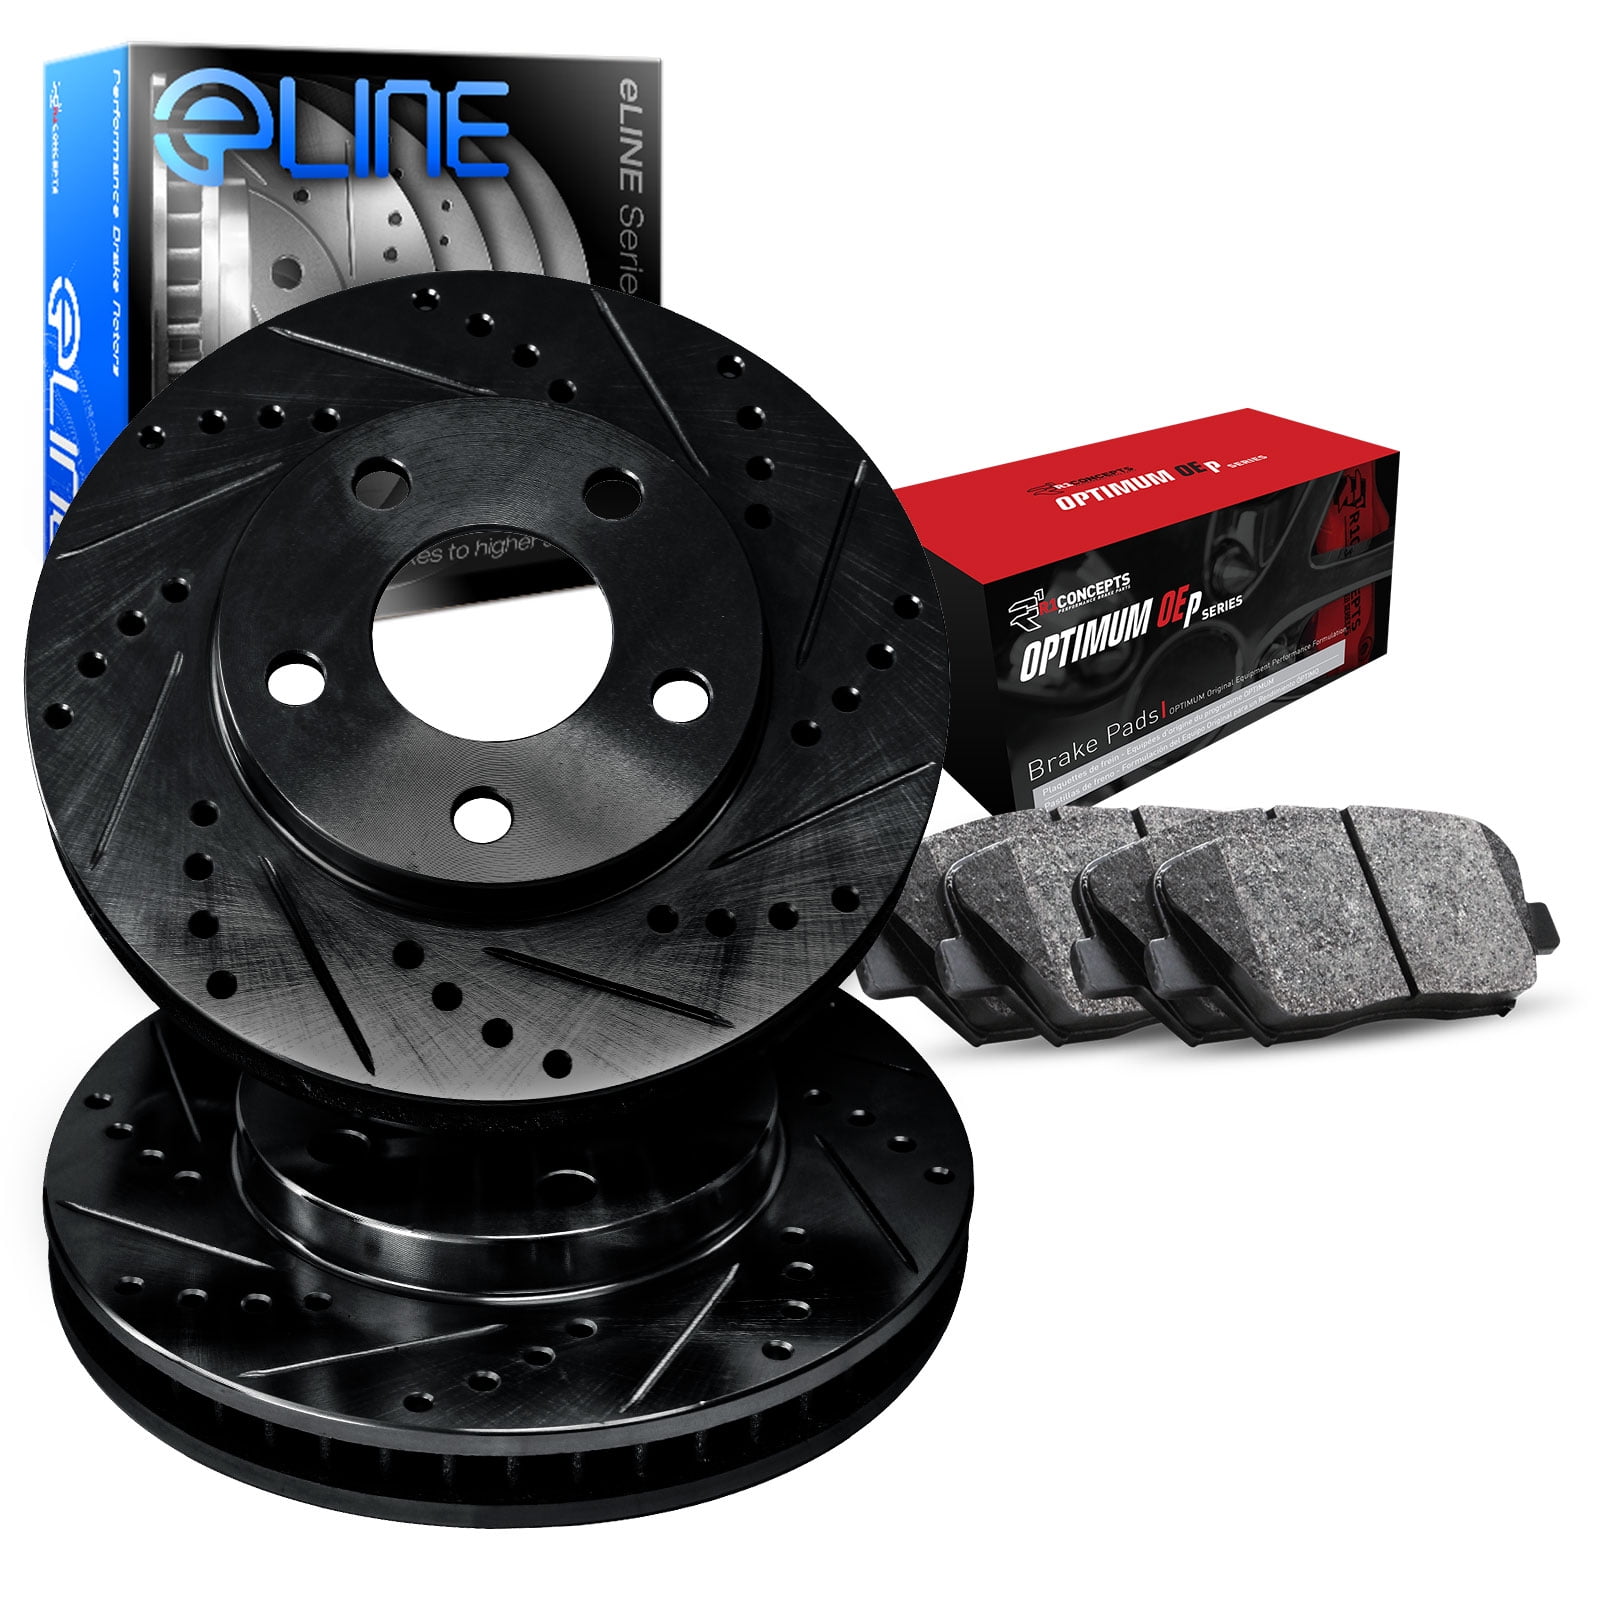 For 2011-2012 Ford Explorer Flex Front Rear eLine Black Drill Slot Brake Rotors